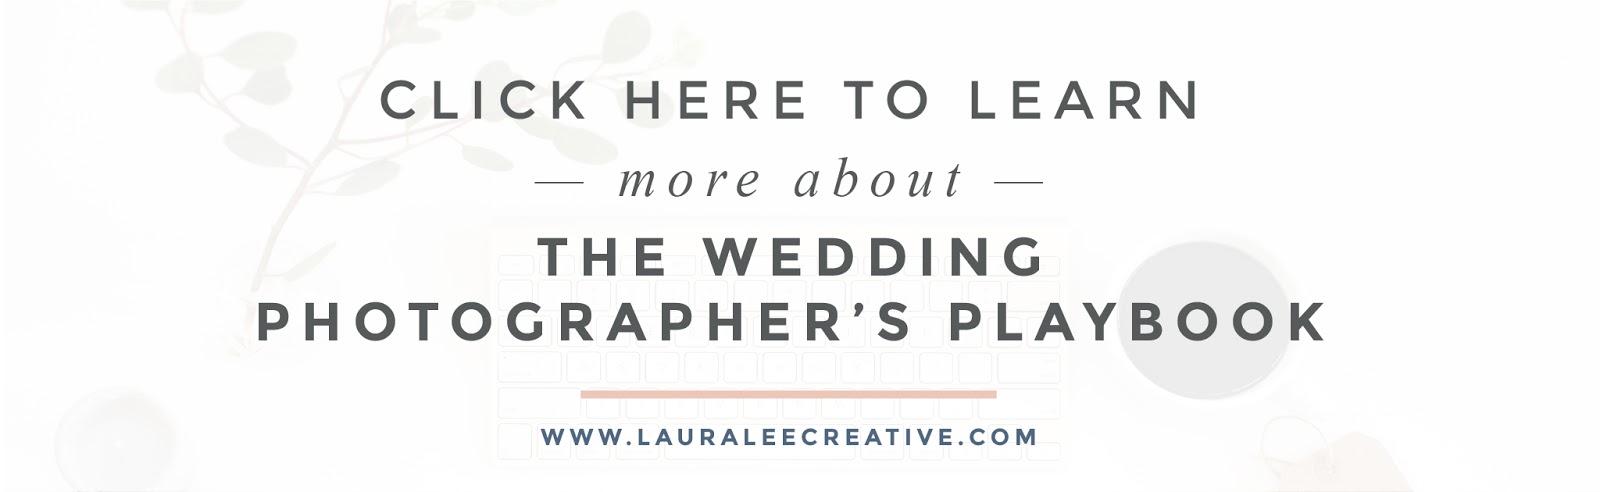 Wedding Photographer's Playbook